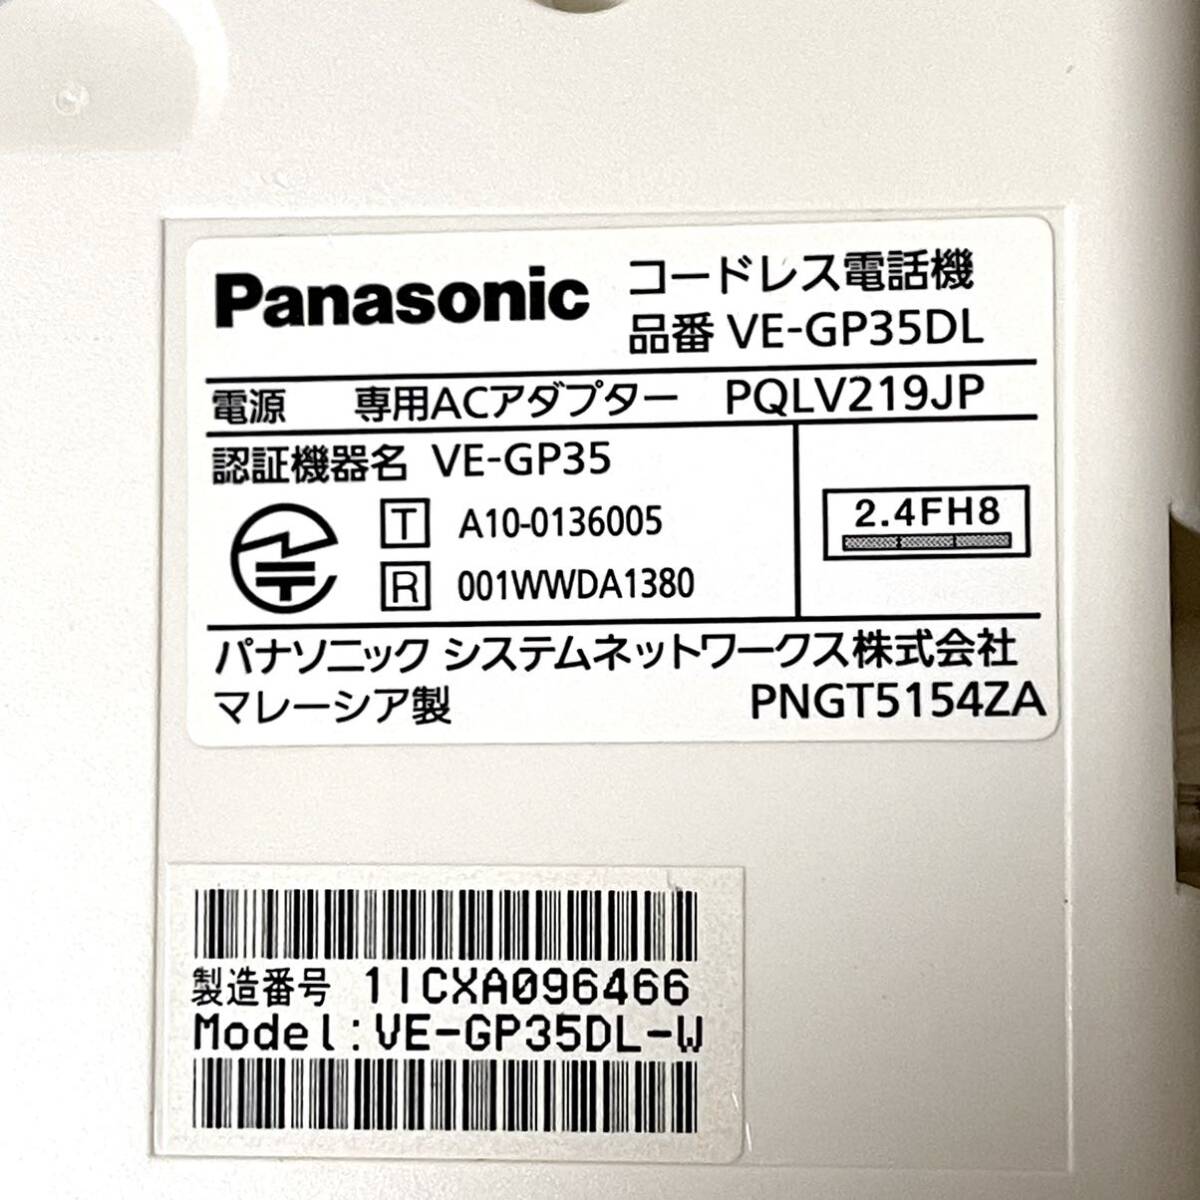  simple operation verification settled Panasonic/ Panasonic home use telephone machine / cordless telephone machine VE-GP62DL cordless handset less 